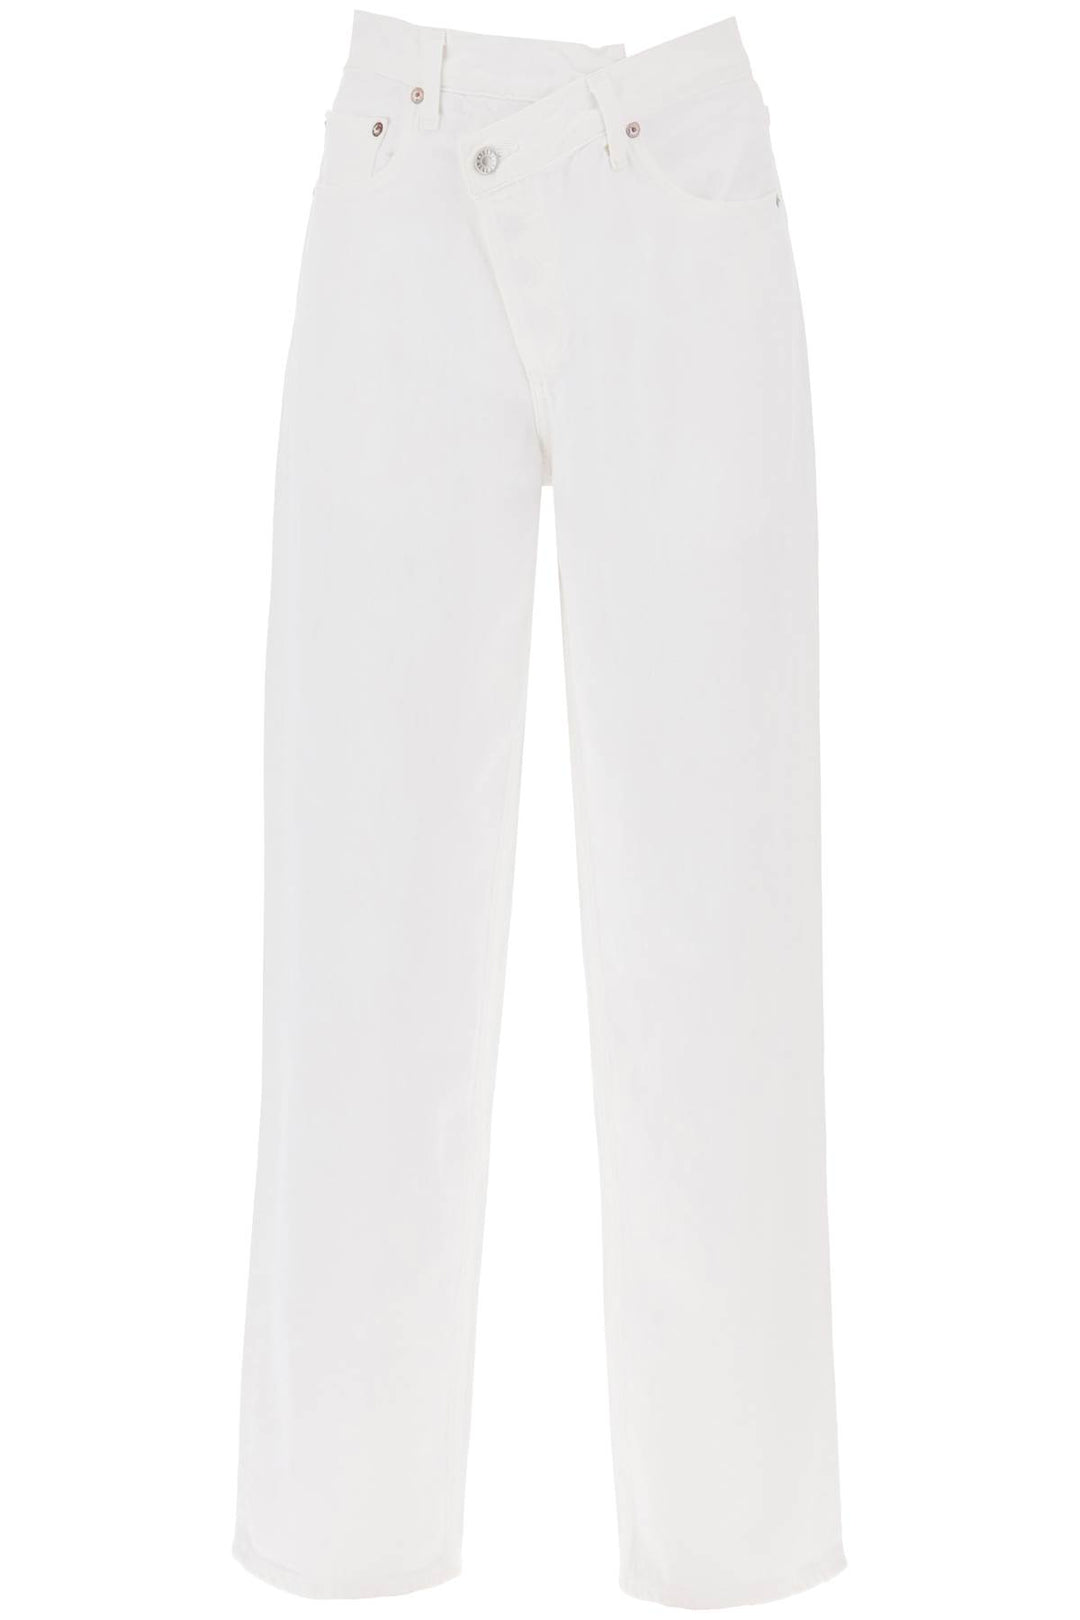 Agolde Criss Cross Jeans   Bianco